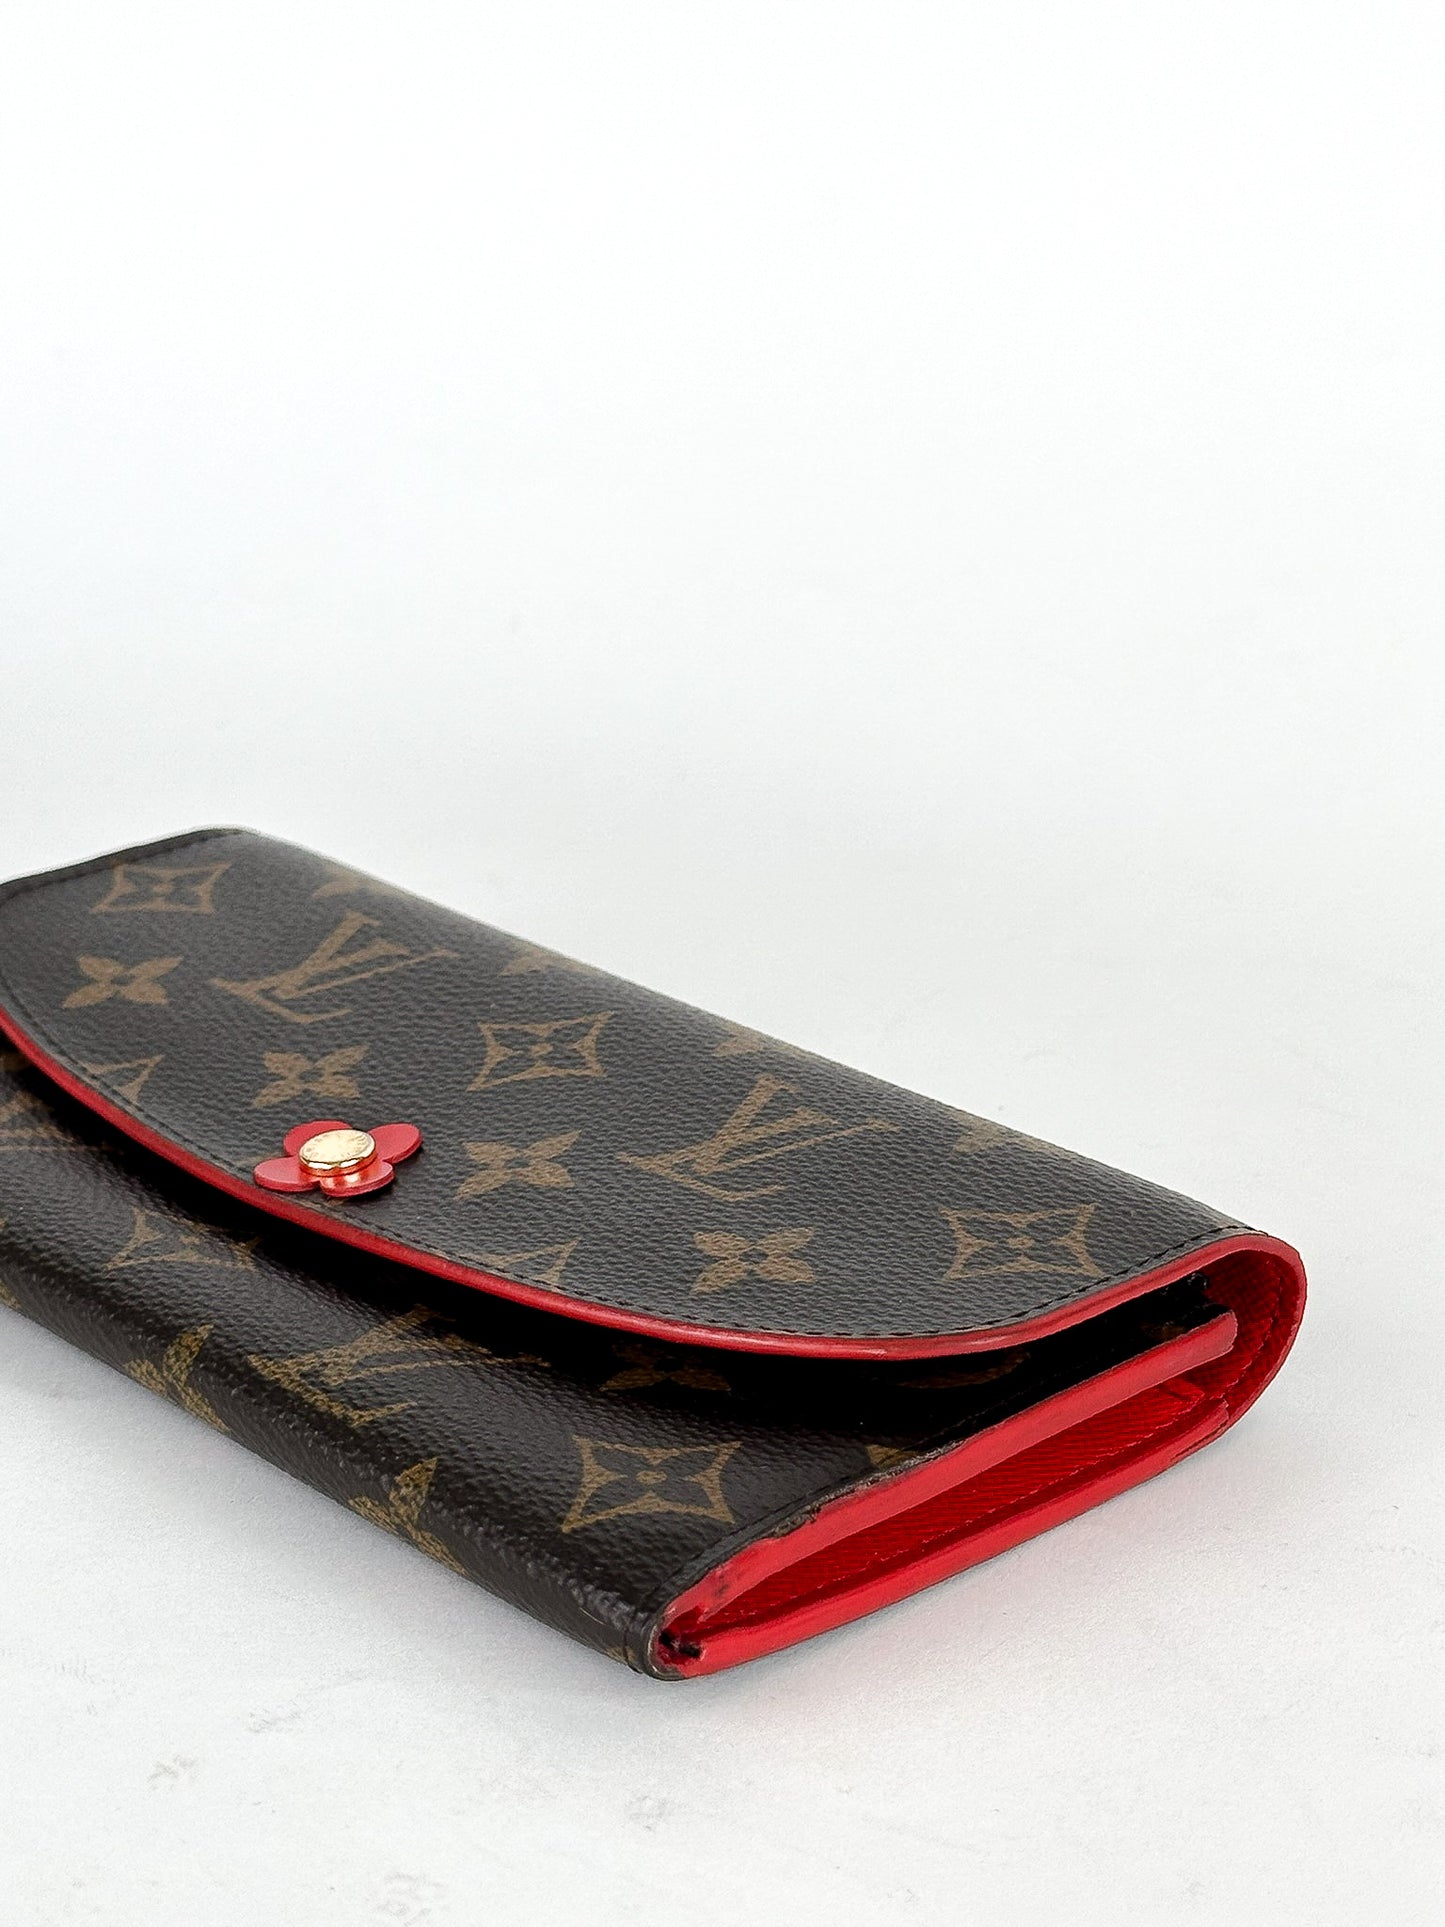 Louis Vuitton Monogram Portefeuille Emily Flower Motif
Bifold Long Wallet Poppy Red